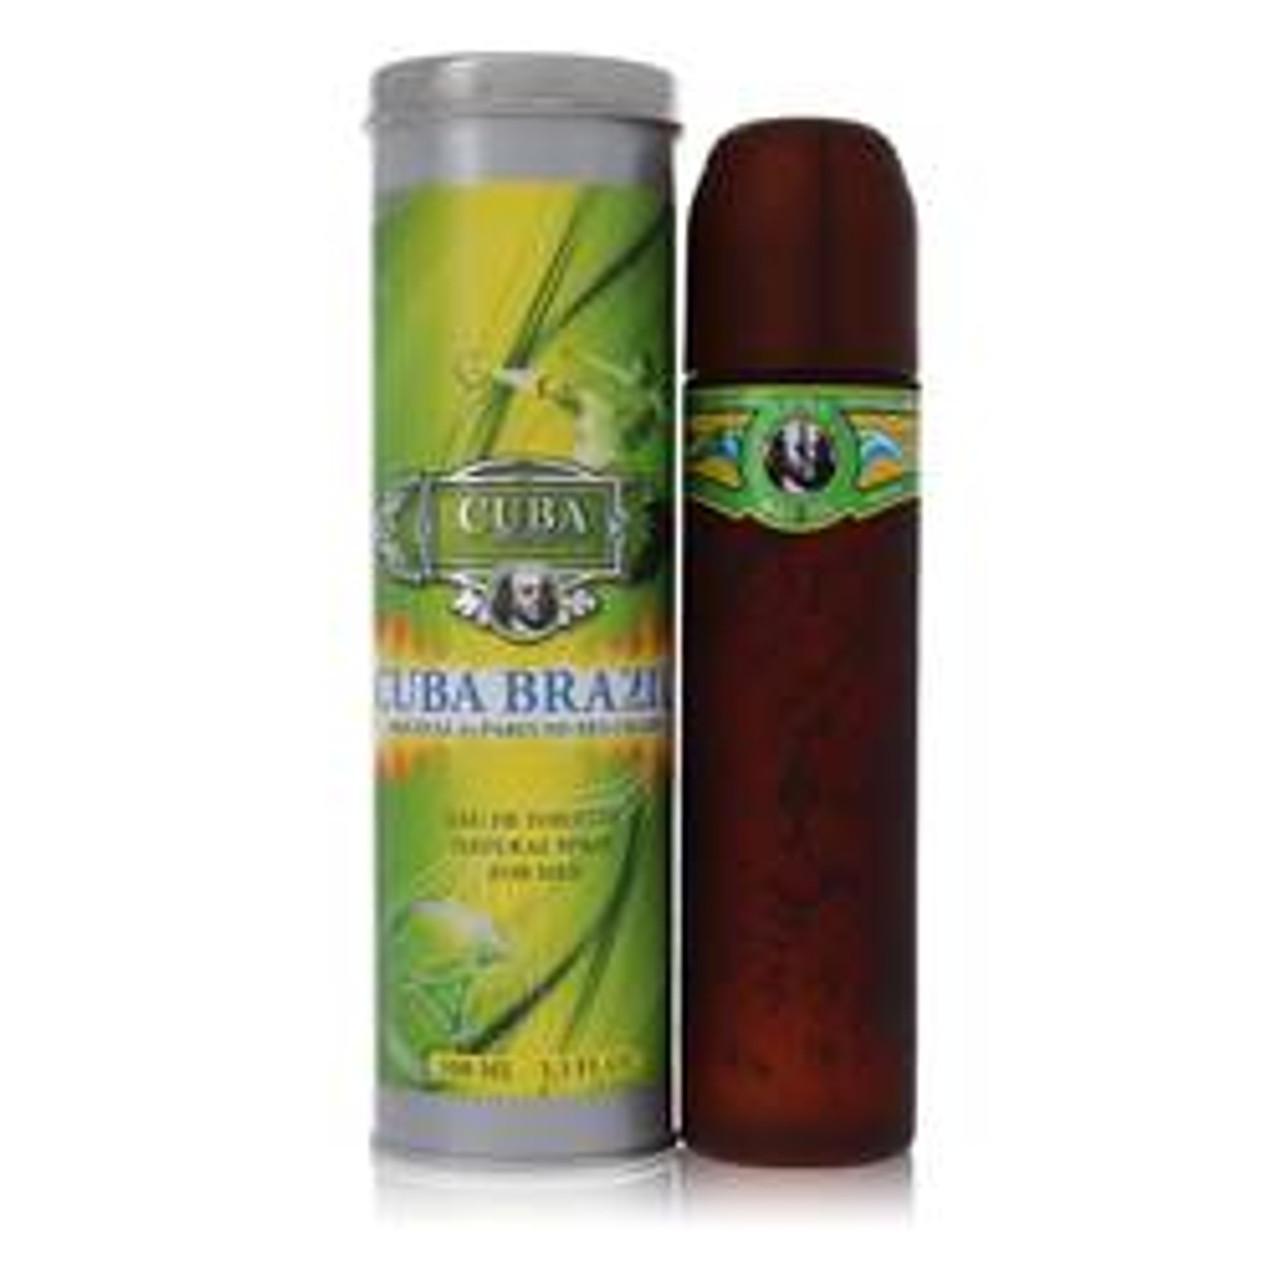 Cuba Brazil Cologne By Fragluxe Eau De Toilette Spray 3.4 oz for Men - [From 23.00 - Choose pk Qty ] - *Ships from Miami